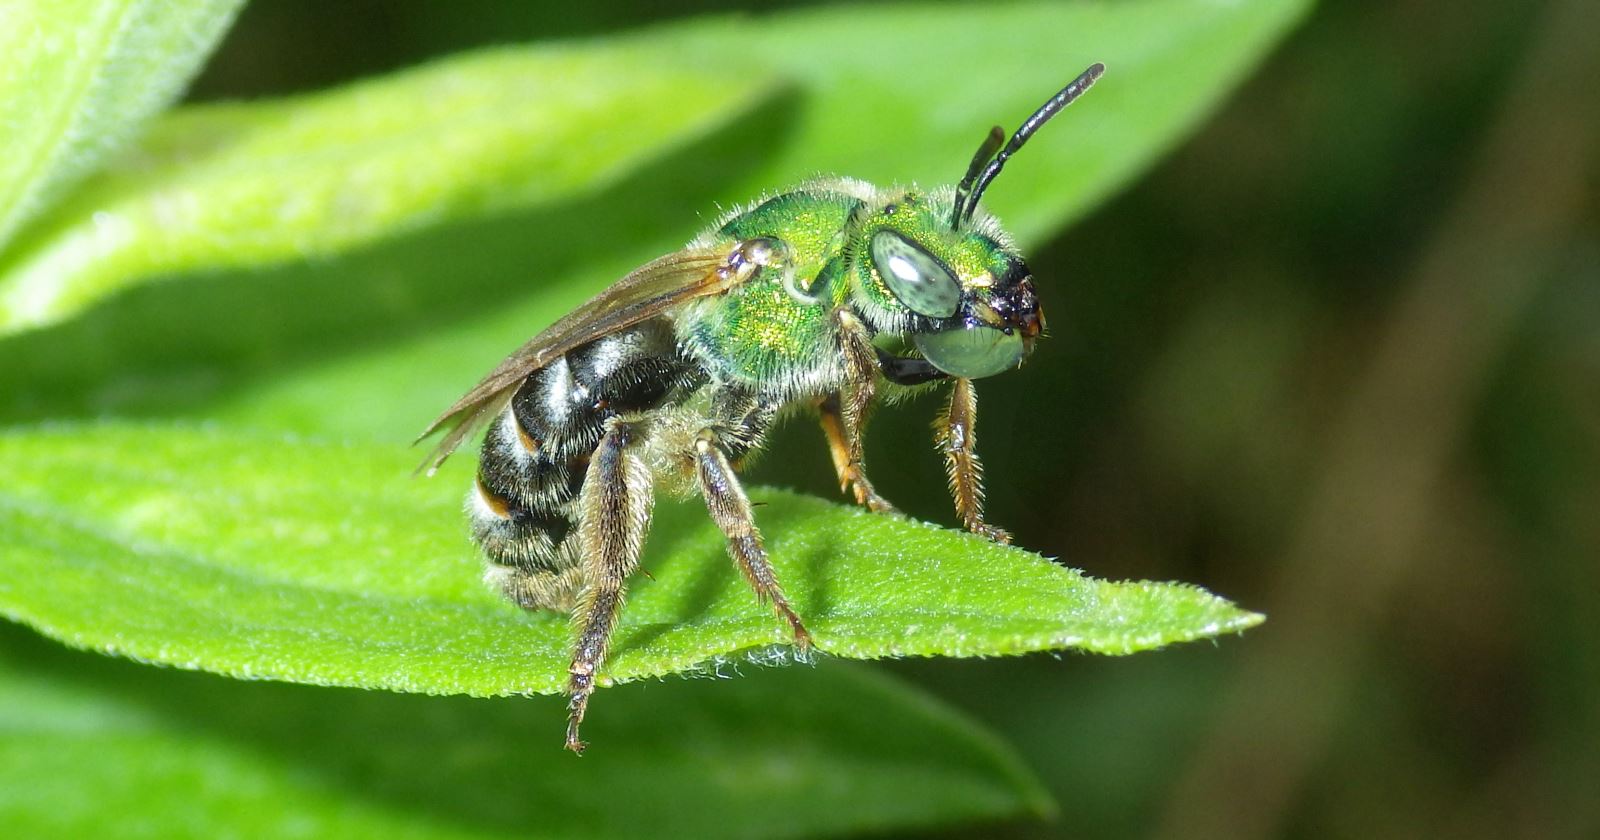 Female Virescent Green Metallic Bee.